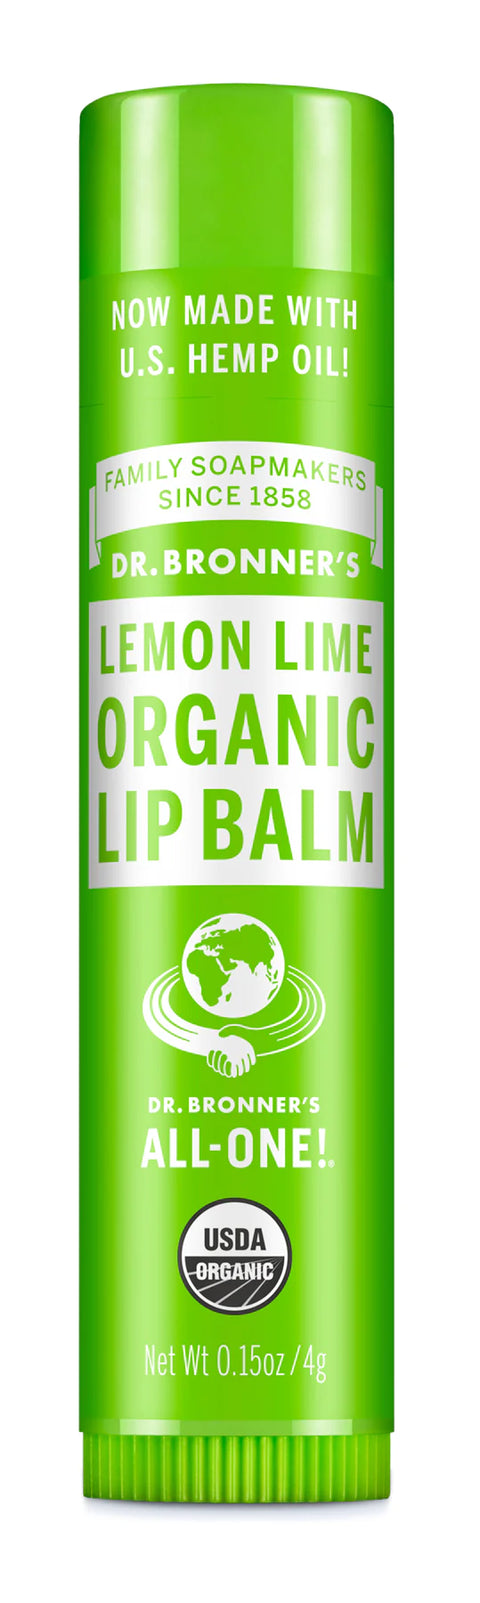 Dr. Bronner's Organic Lip Balm, Lemon Lime